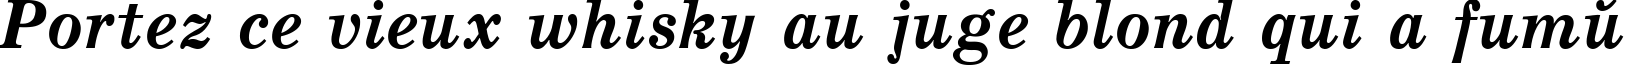 Пример написания шрифтом School Bold Italic:001.001 текста на французском